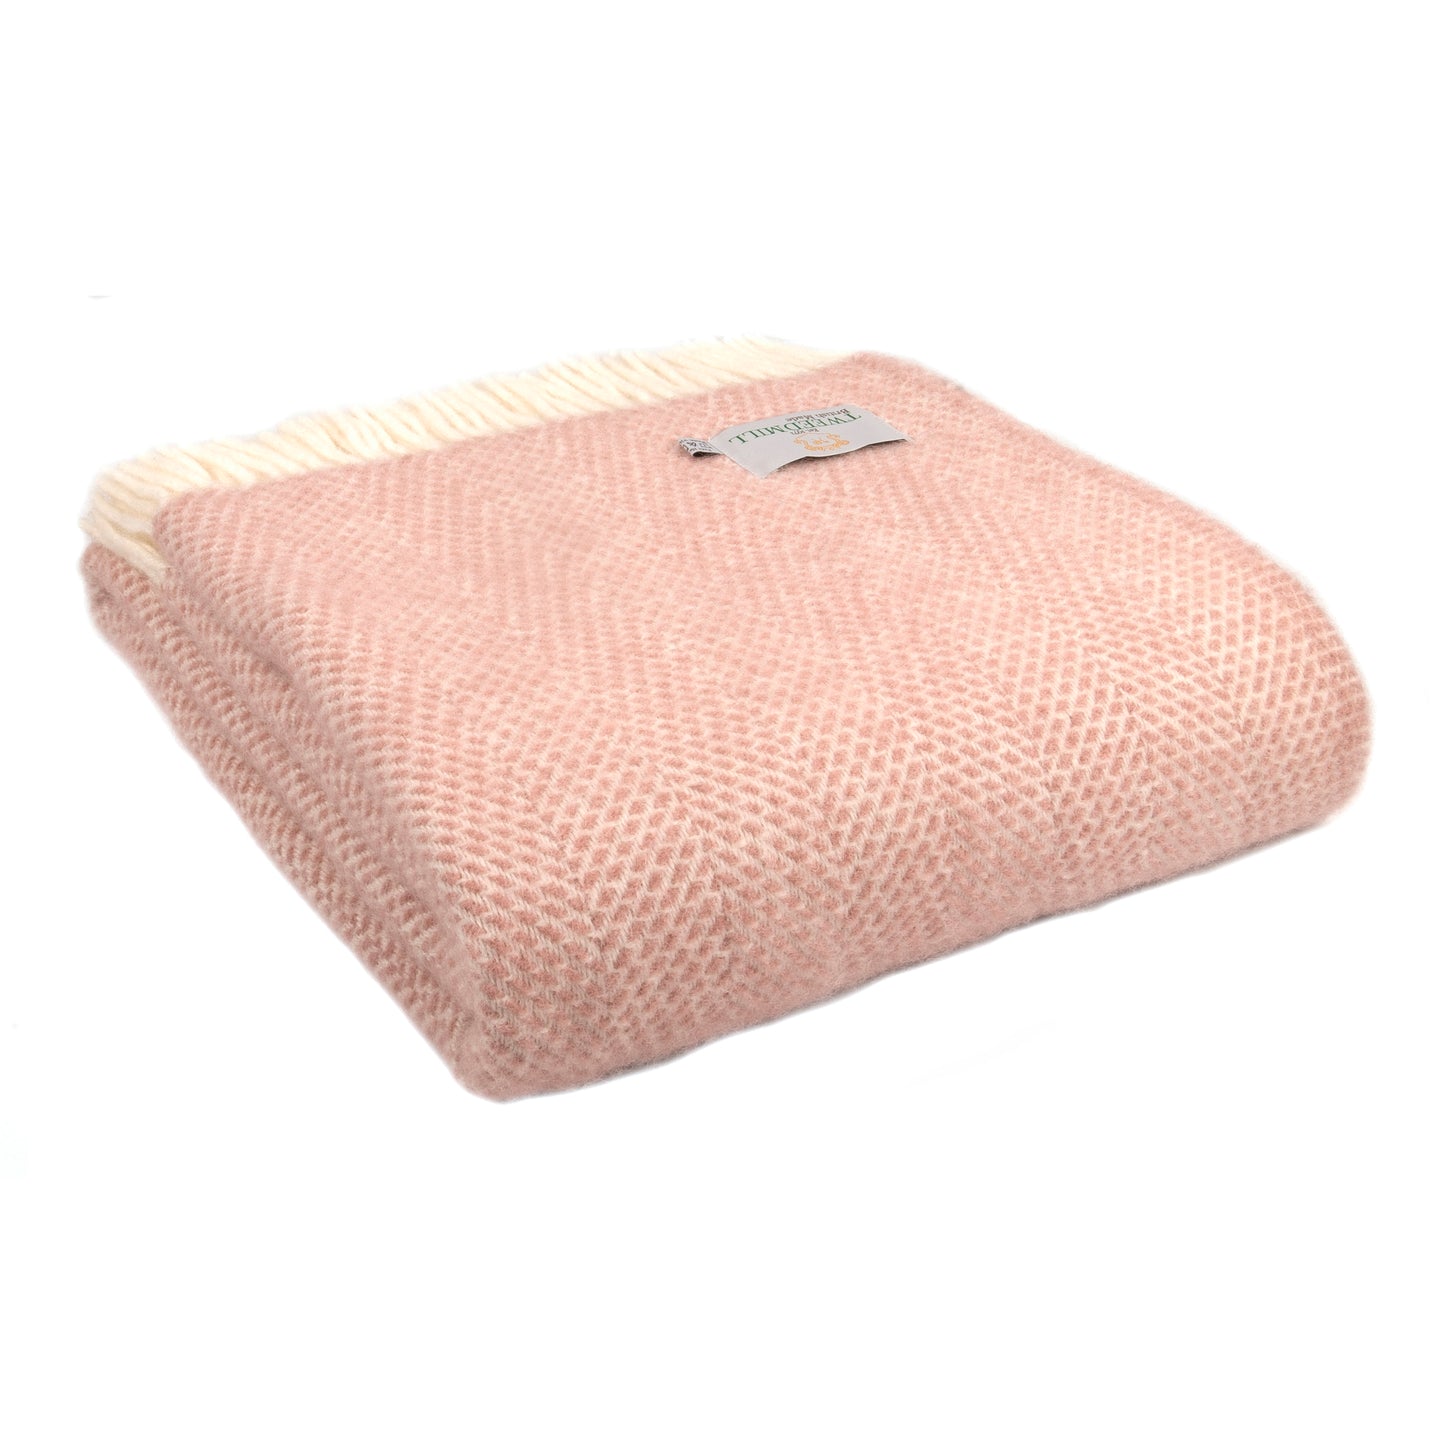 Tweedmill Beehive Pure New Wool Throw, Dusty Pink